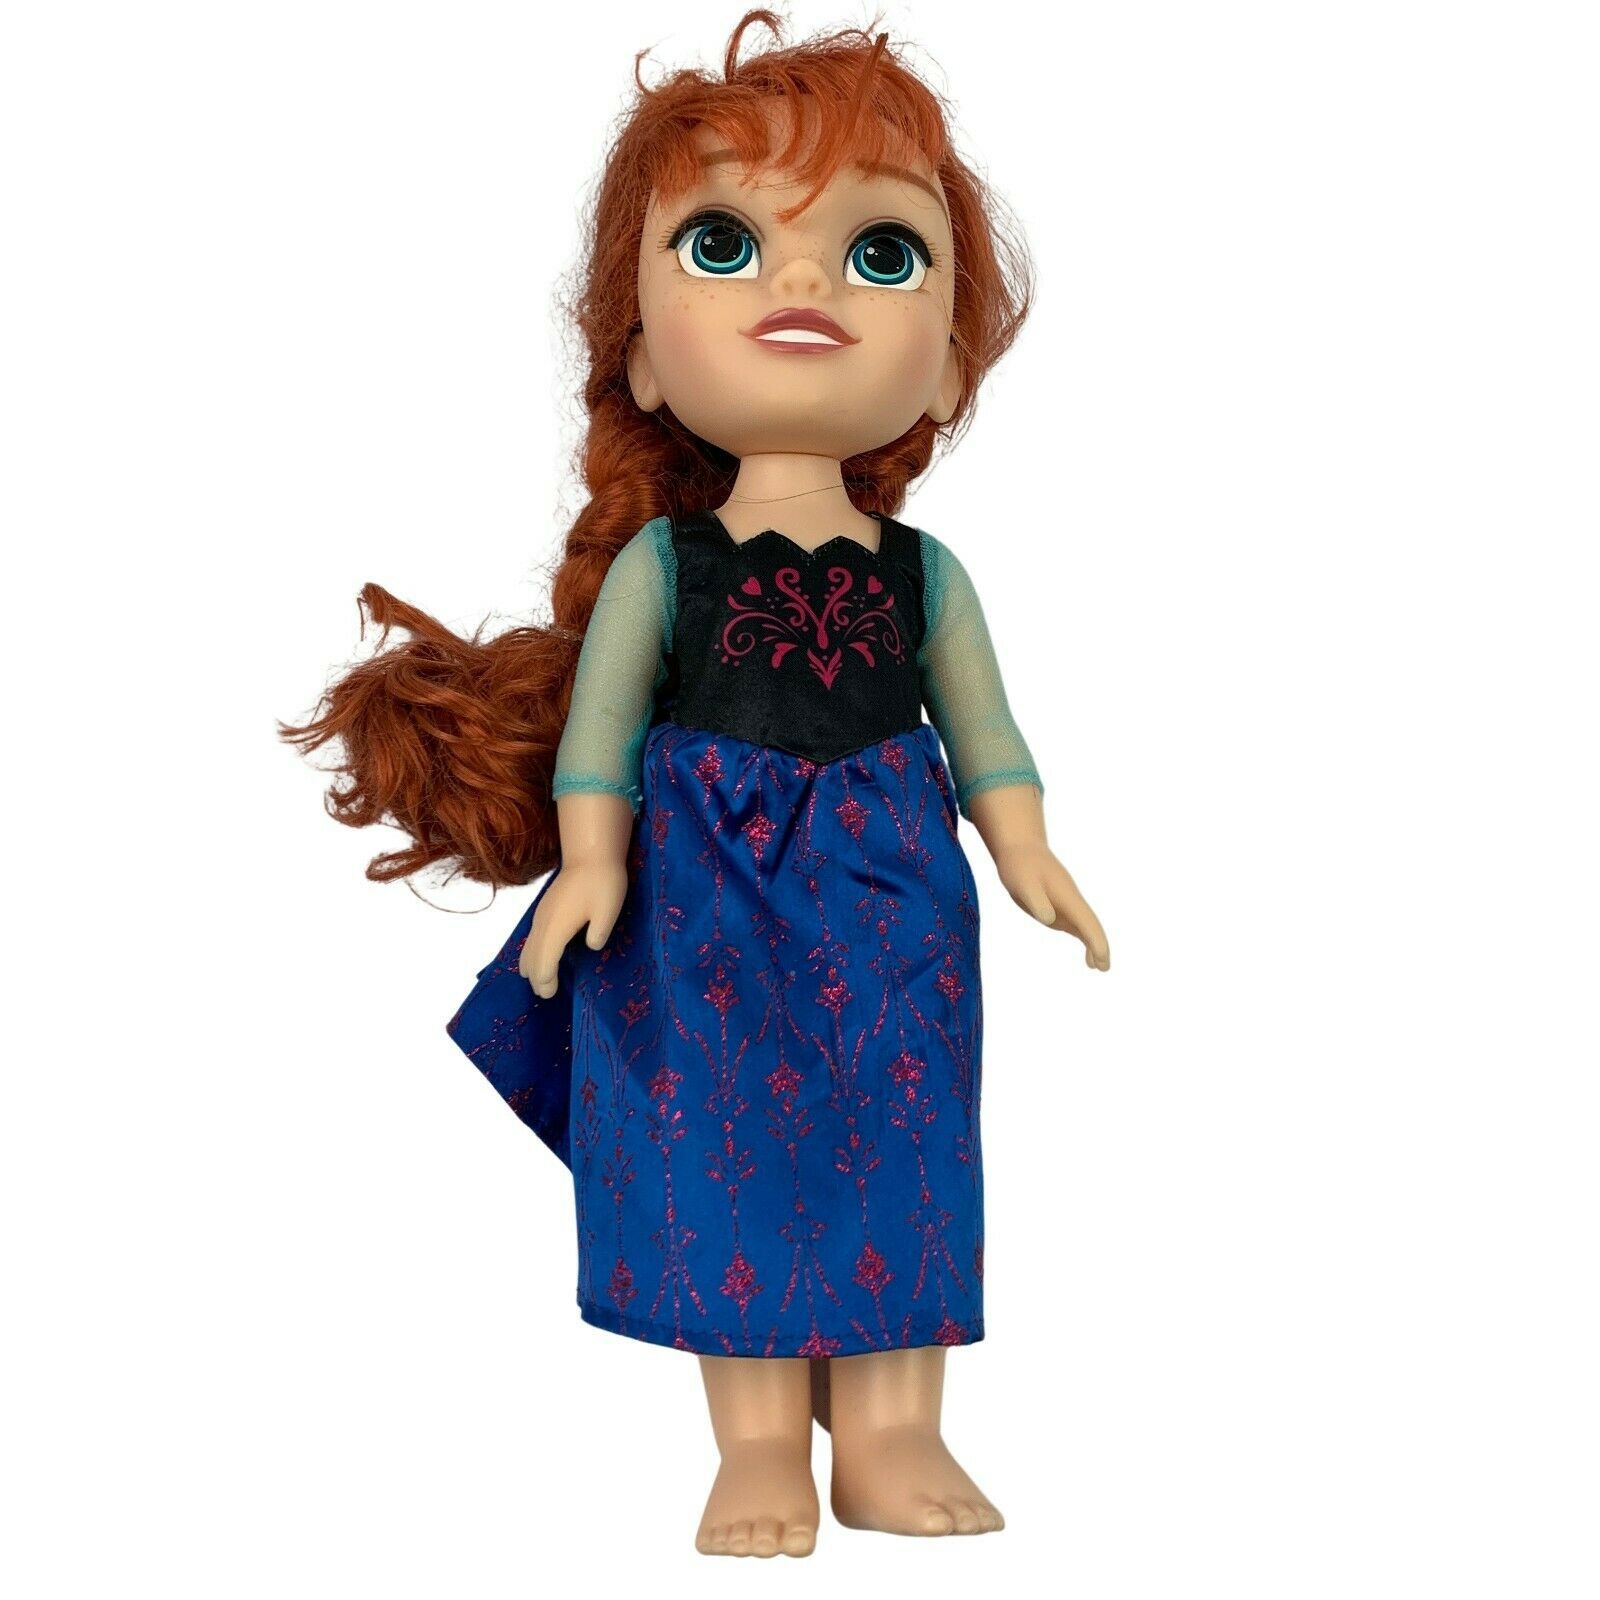 Frozen Disney Princess Anna Toddler Doll Dress Up Jakks Pacific Made in China - $14.82